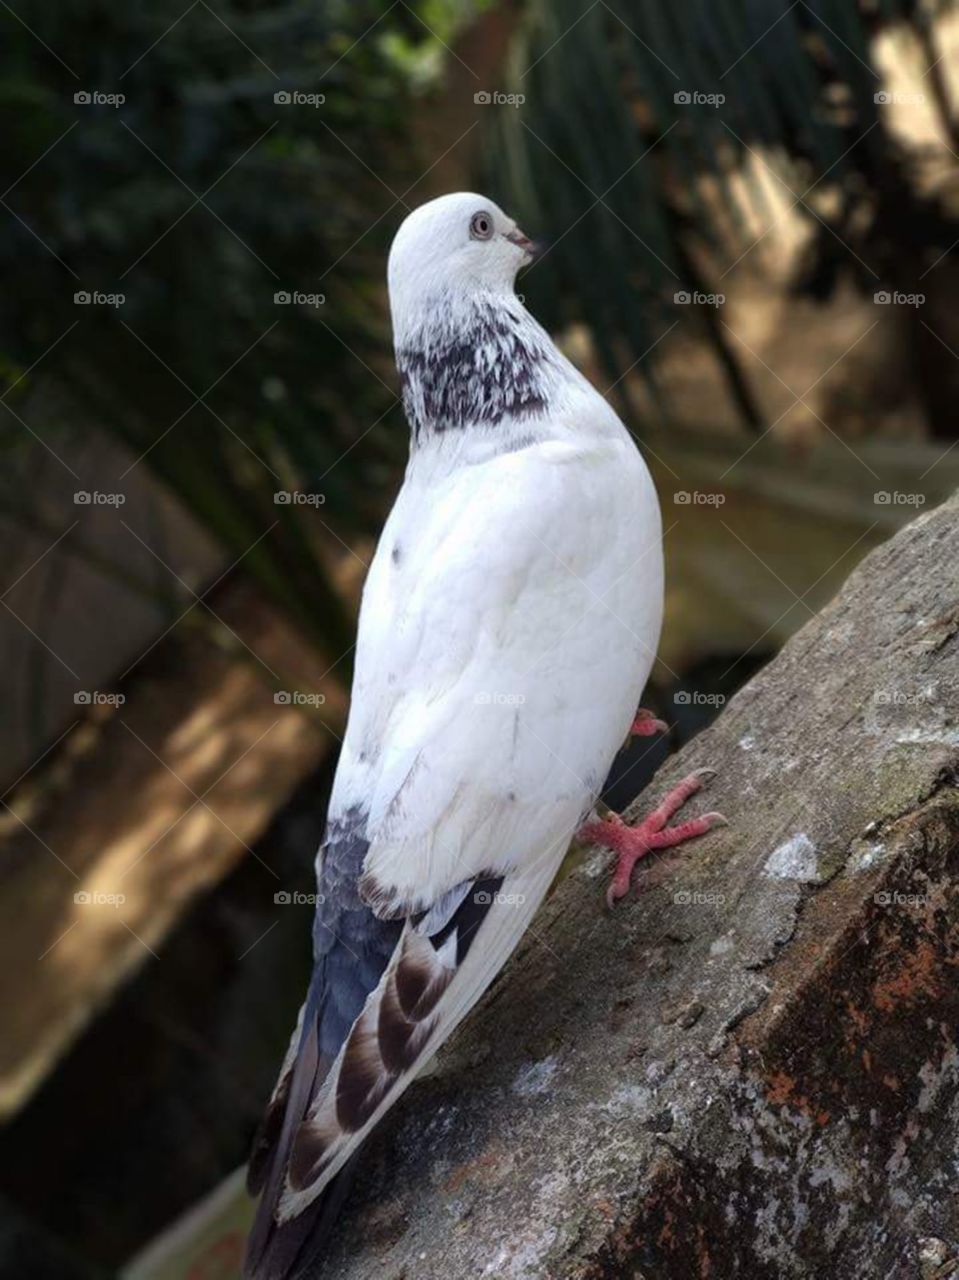 A Pigeon image